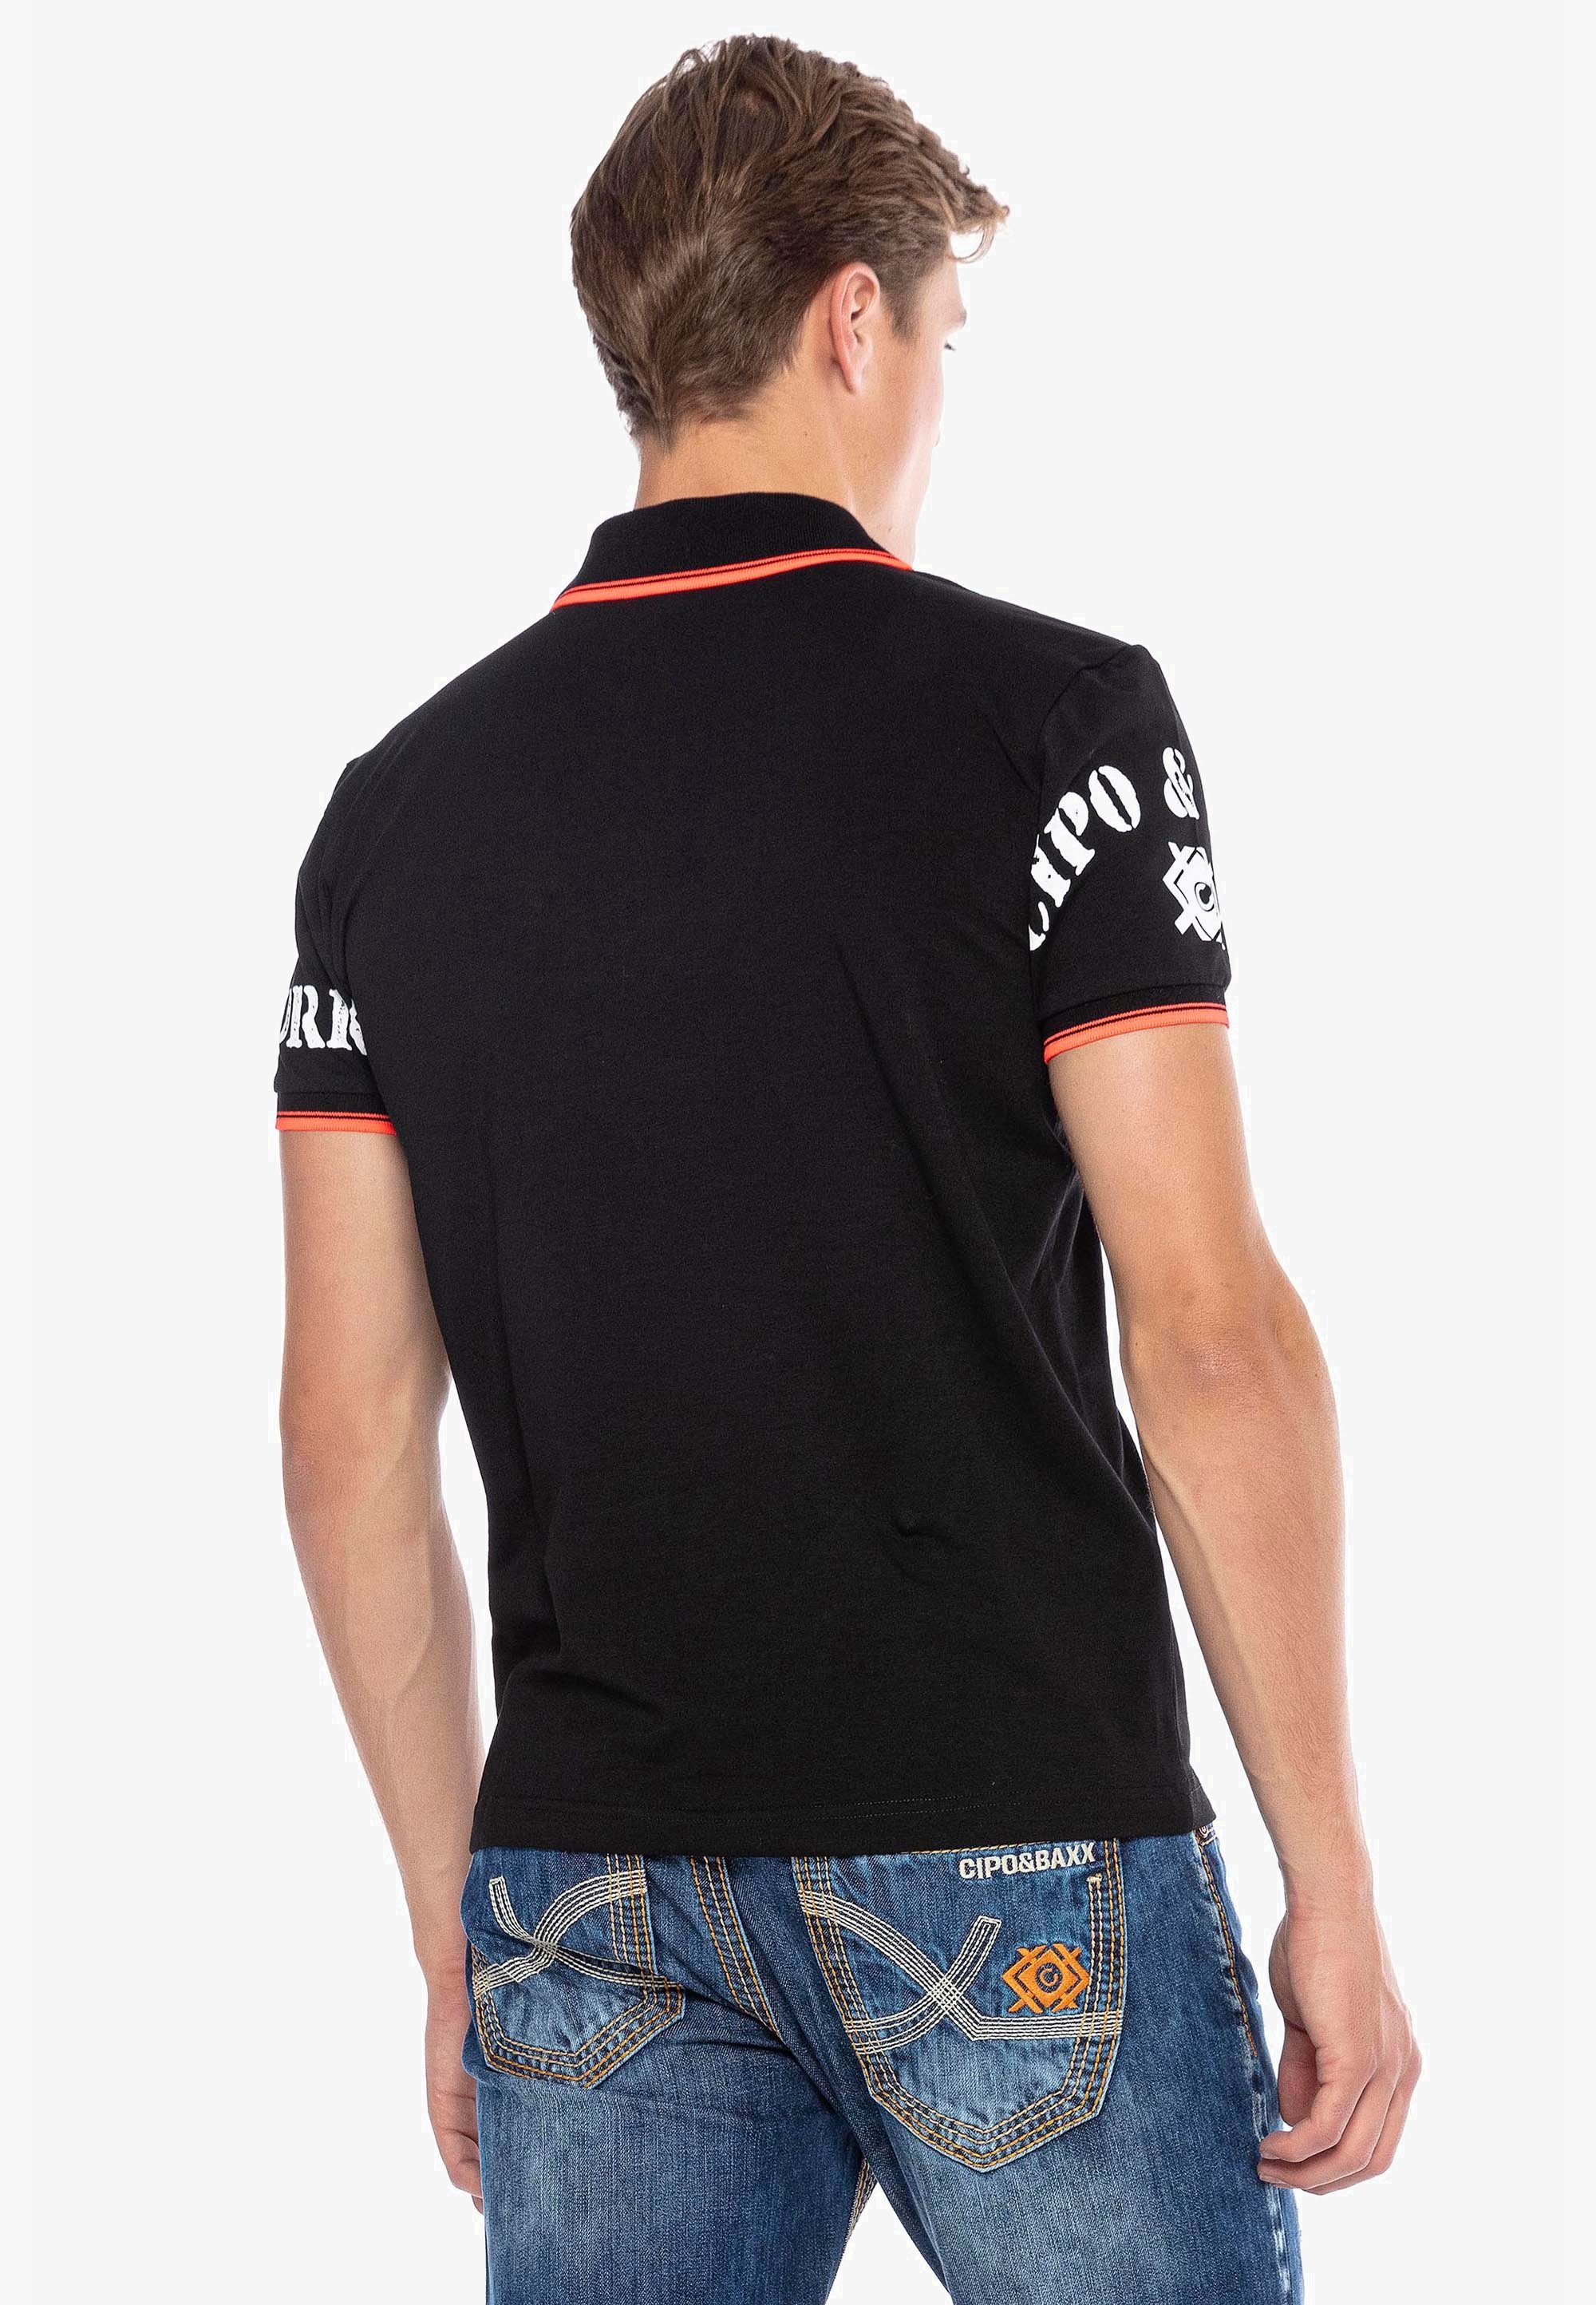 Baxx mit Cipo Poloshirt & Print schwarz trendigem